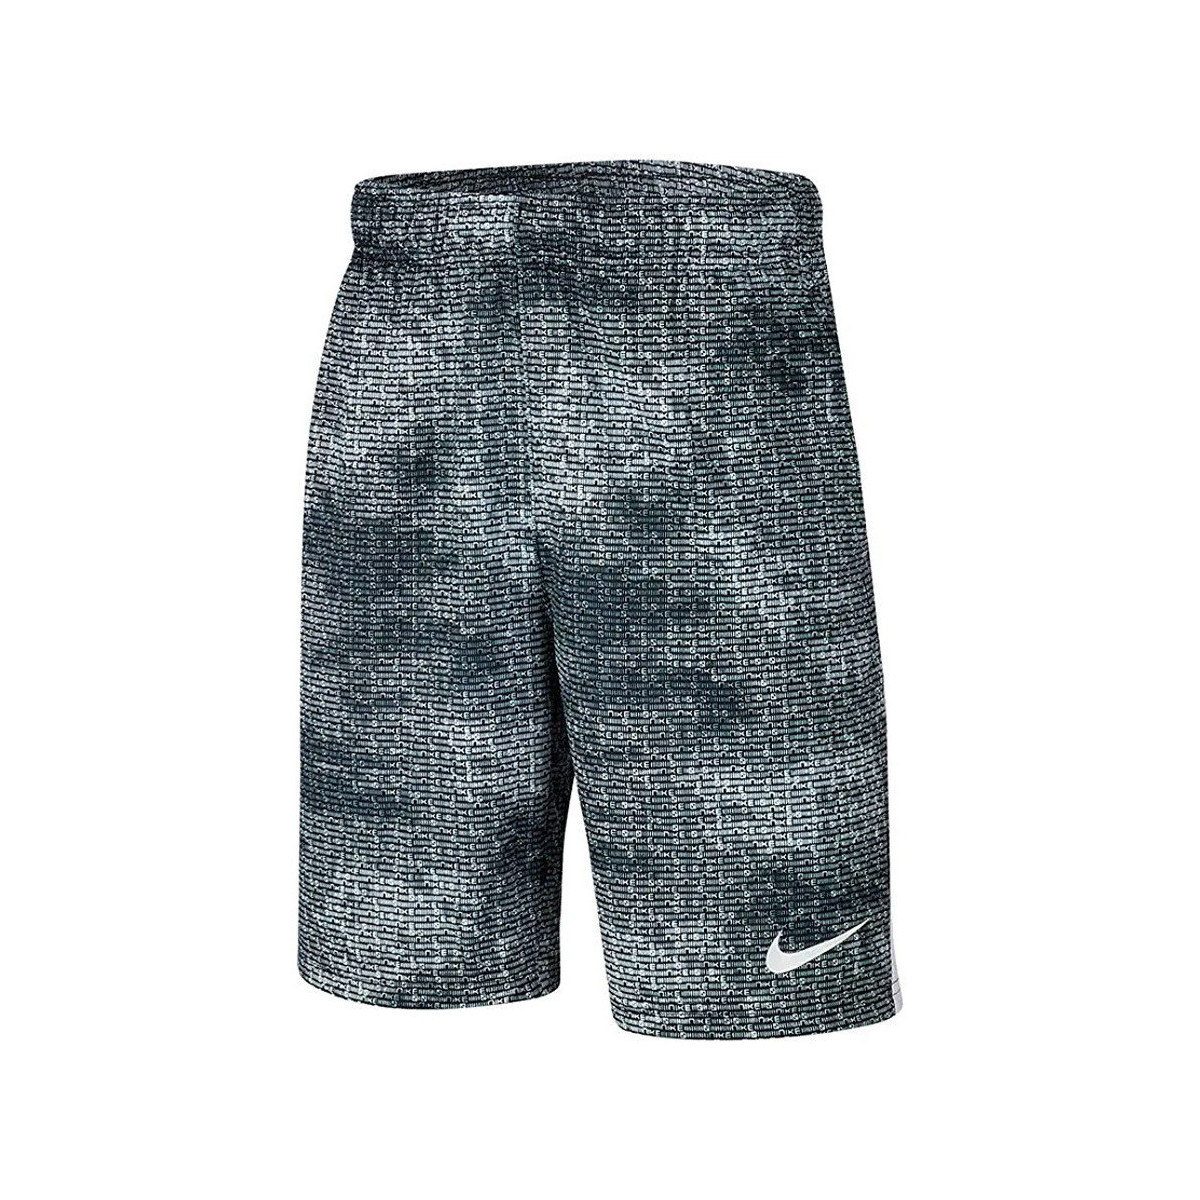 textil Niño Shorts / Bermudas Nike  Gris